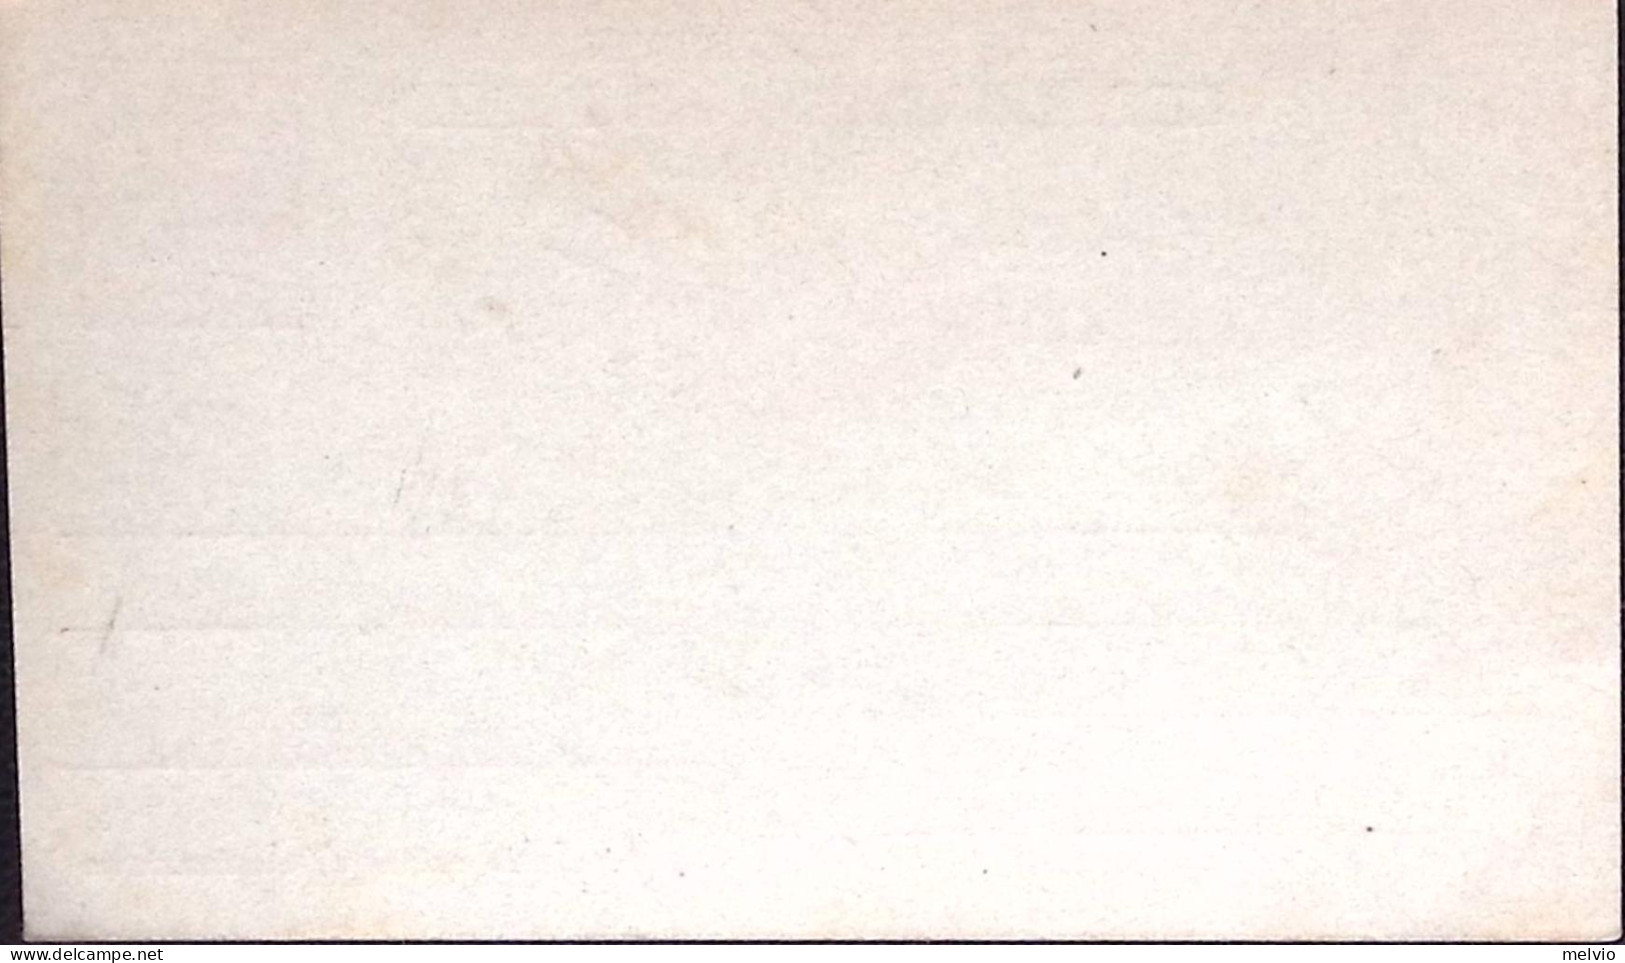 1891-Cartolina Postale PER ESTERO Umberto C.10 Mill. 91 Nuova - Postwaardestukken